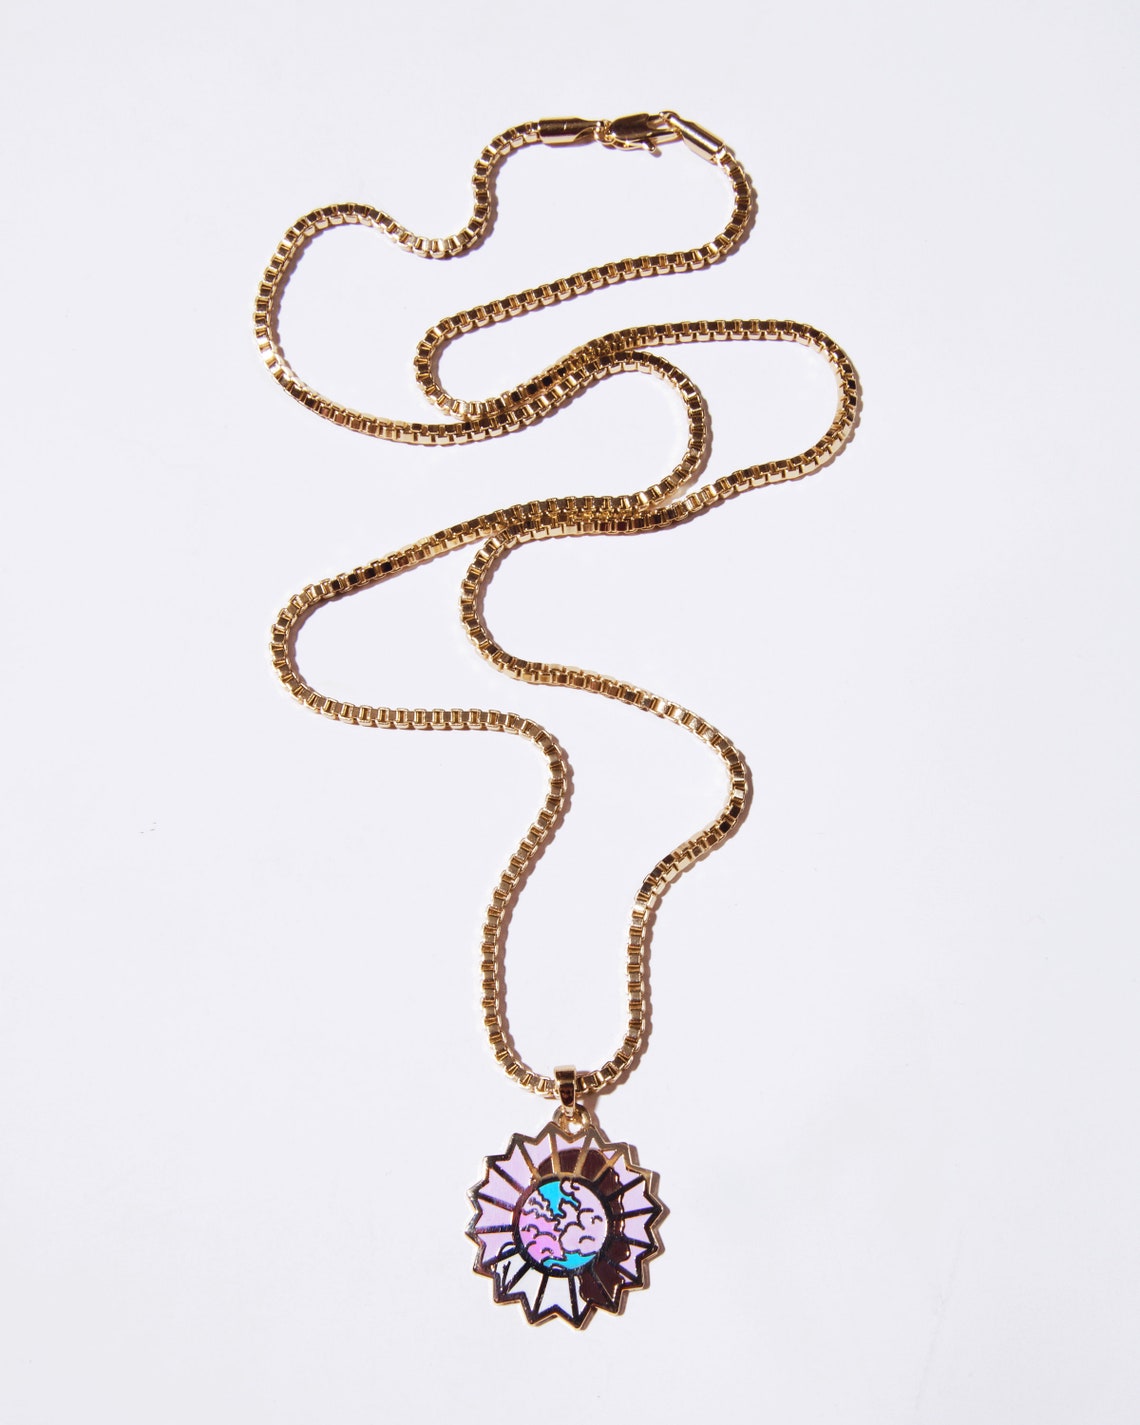 Mac Miller The Divine Feminine GOLD single charm necklace. | Etsy